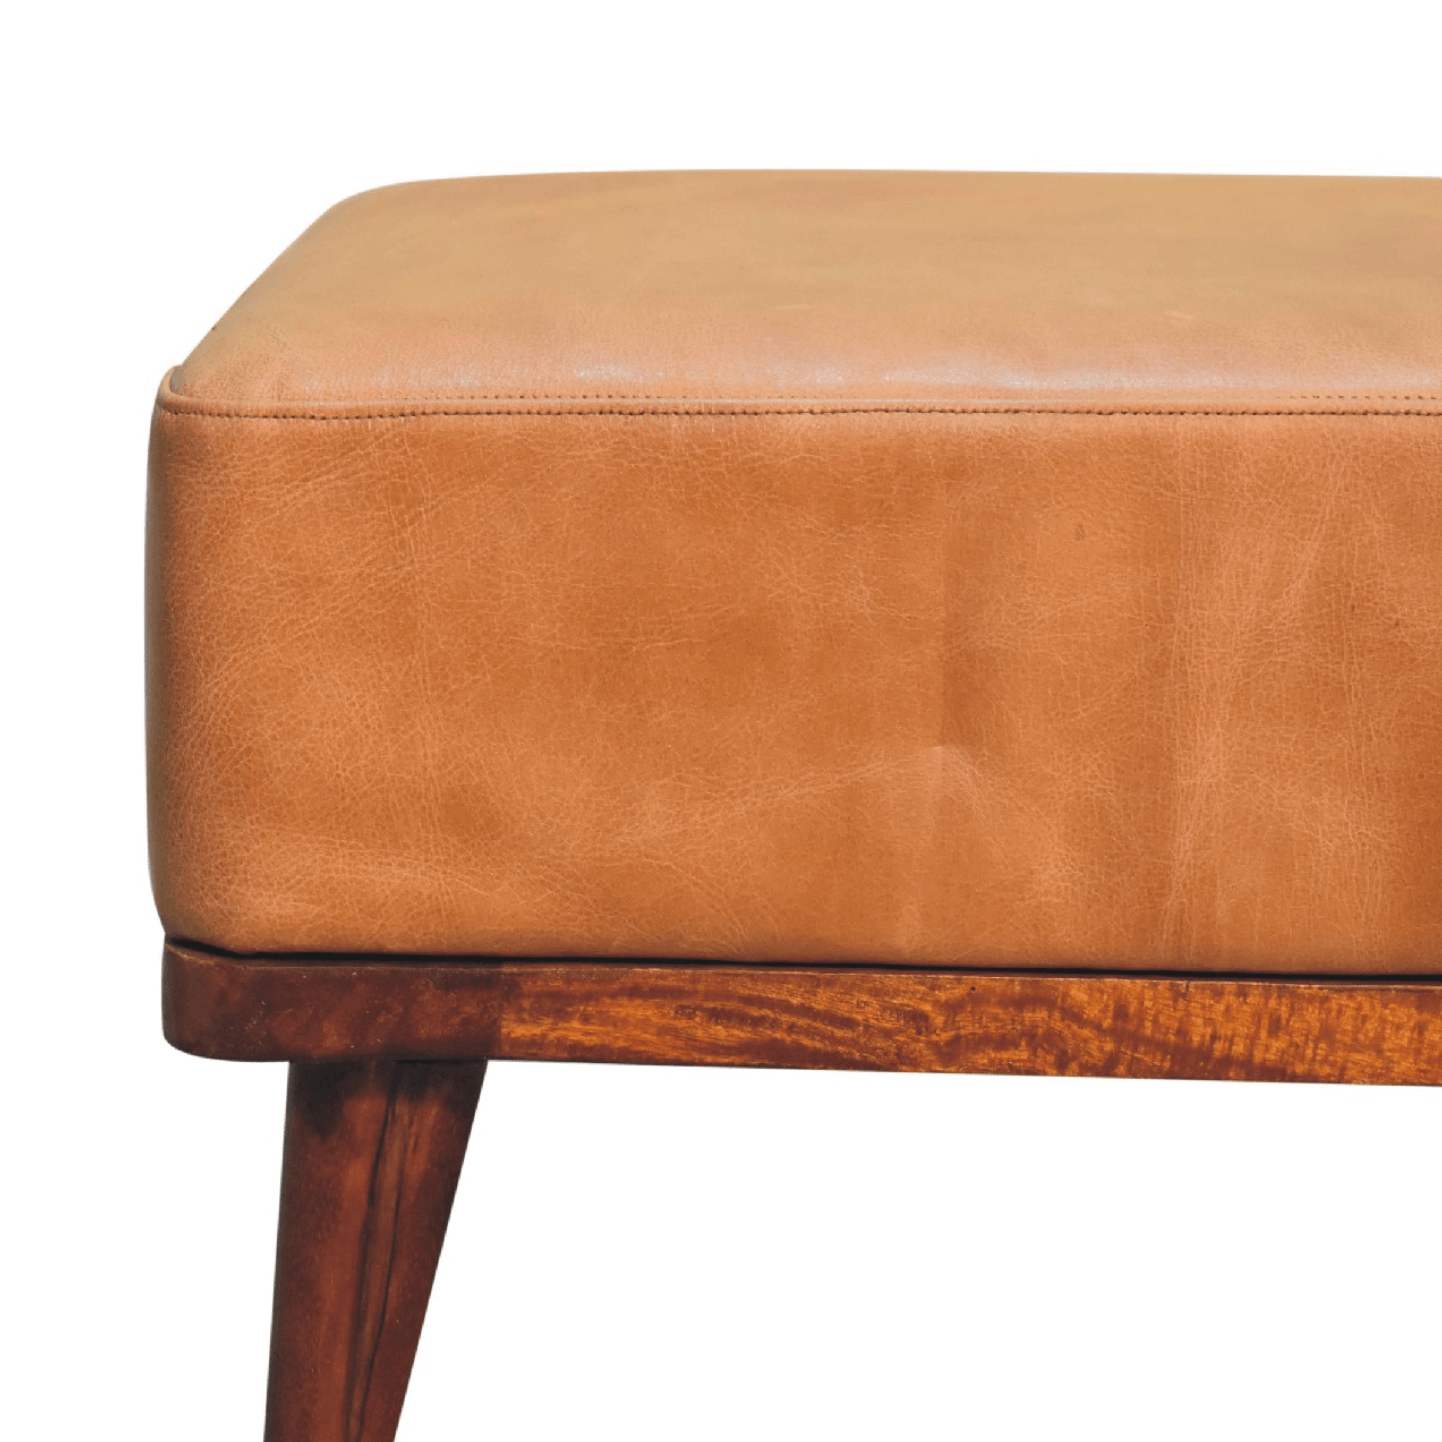 MCM Styled Genuine Buffalo Leather Ottoman Footstool, Tan 20" - Revel Sofa 